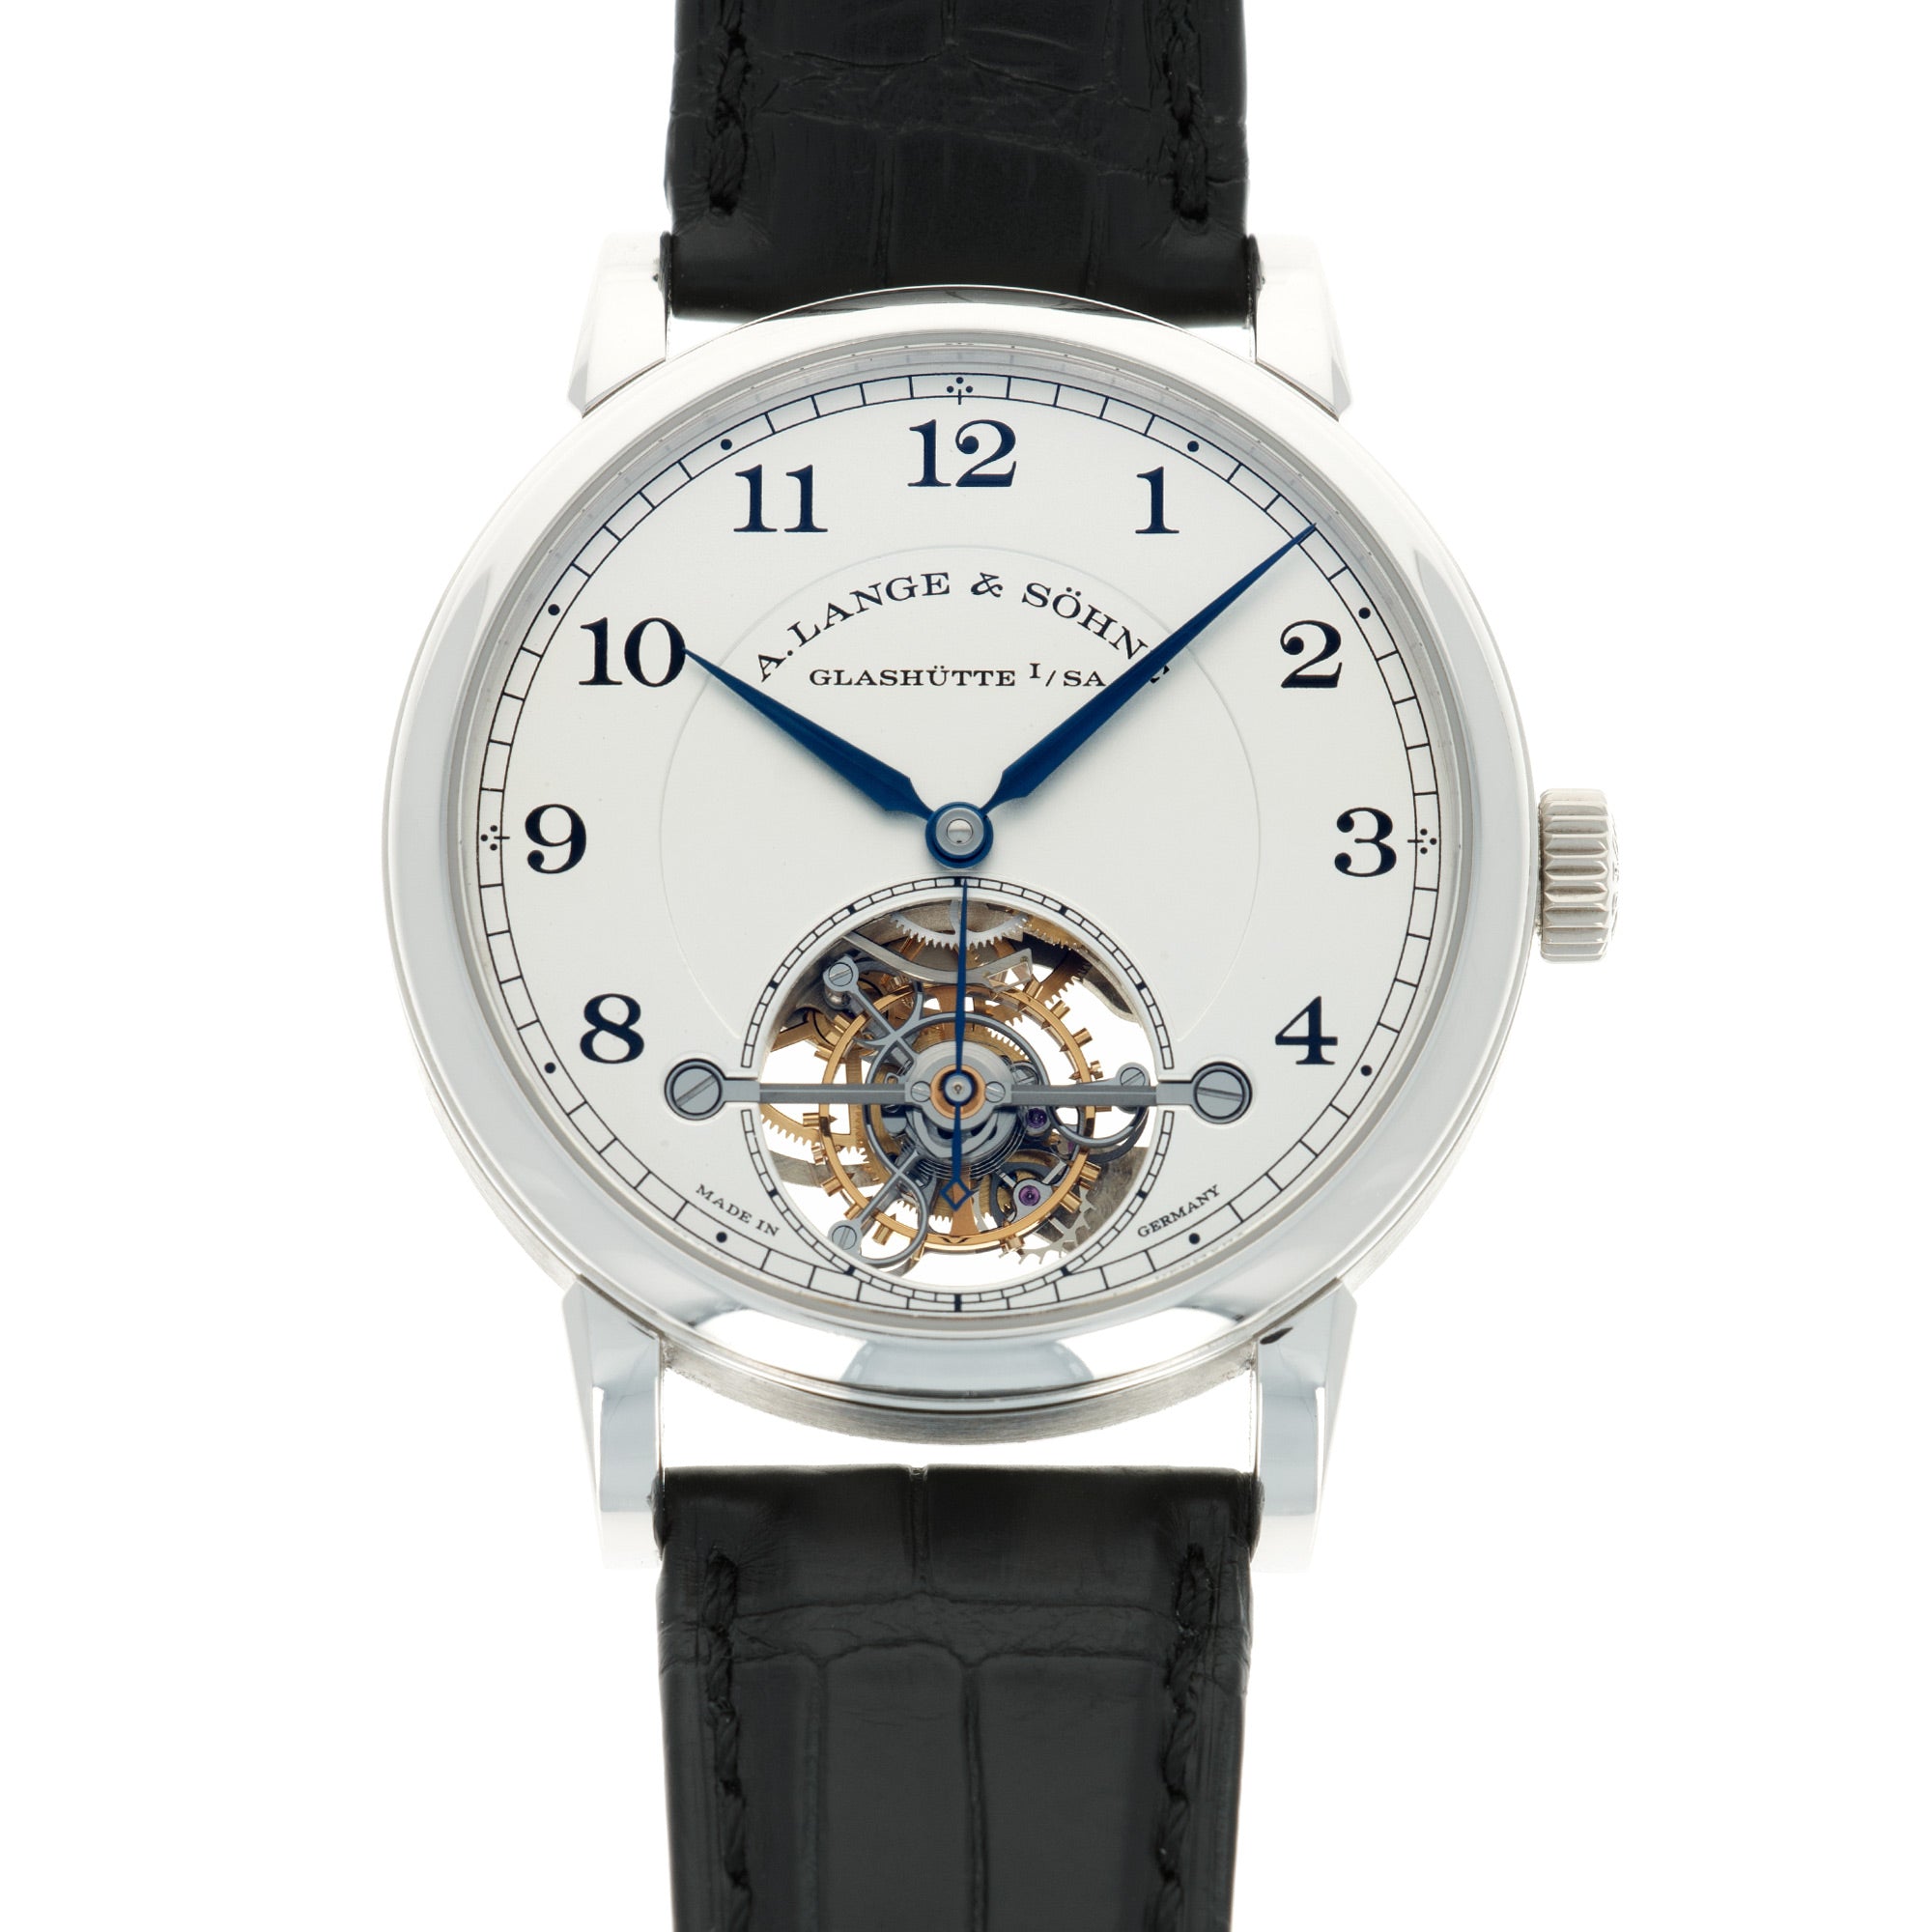 A. Lange & Sohne - A. Lange & Sohne Platinum 1815 Tourbillon Watch Ref. 730.025 - The Keystone Watches